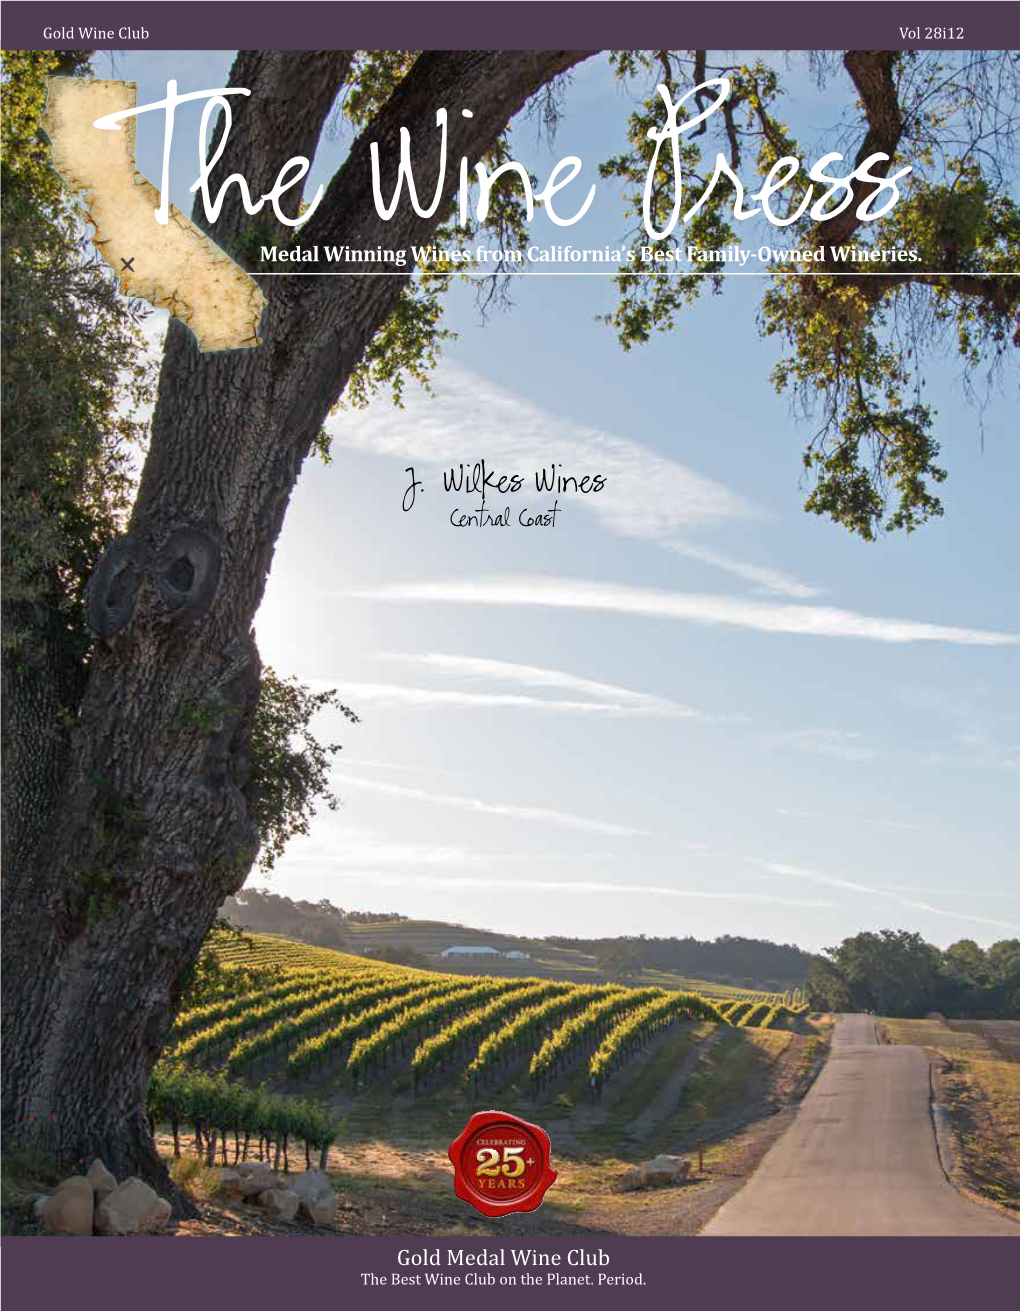 J. Wilkes Wines Central Coast